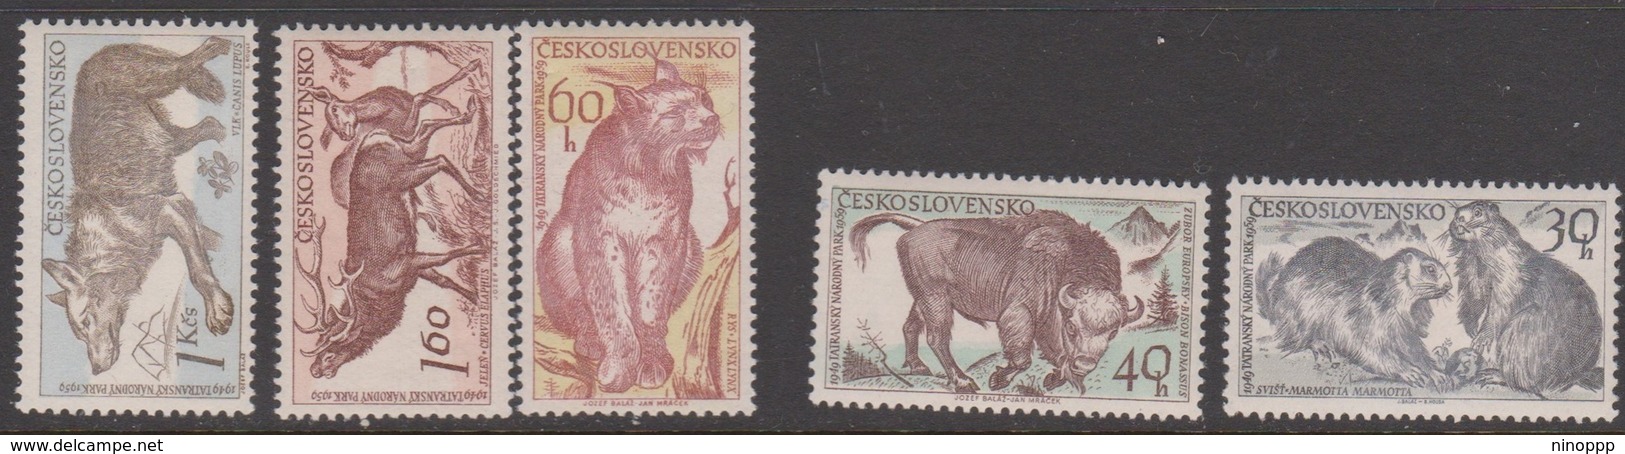 Czechoslovakia SG 1112-1116 1959  10th Anniversary Tatra National Park, Mint Never Hinged - Unused Stamps